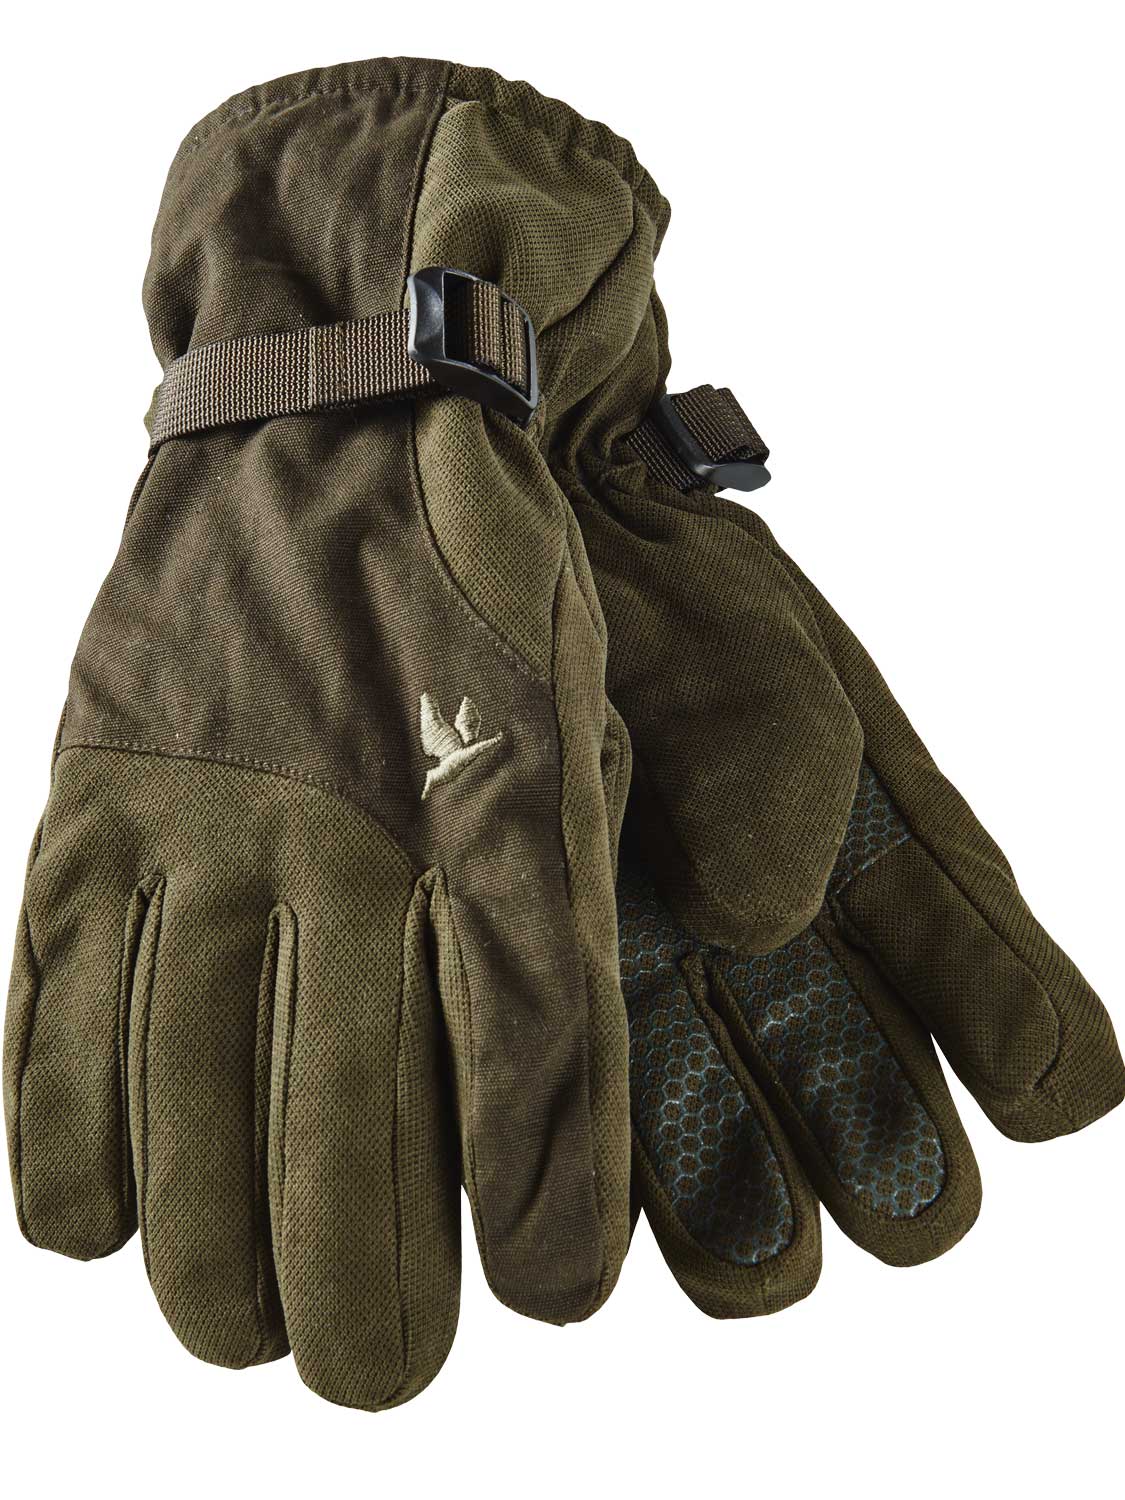 SEELAND Gloves - Helt Anti Slip Palms & Waterproof - Grizzly Brown